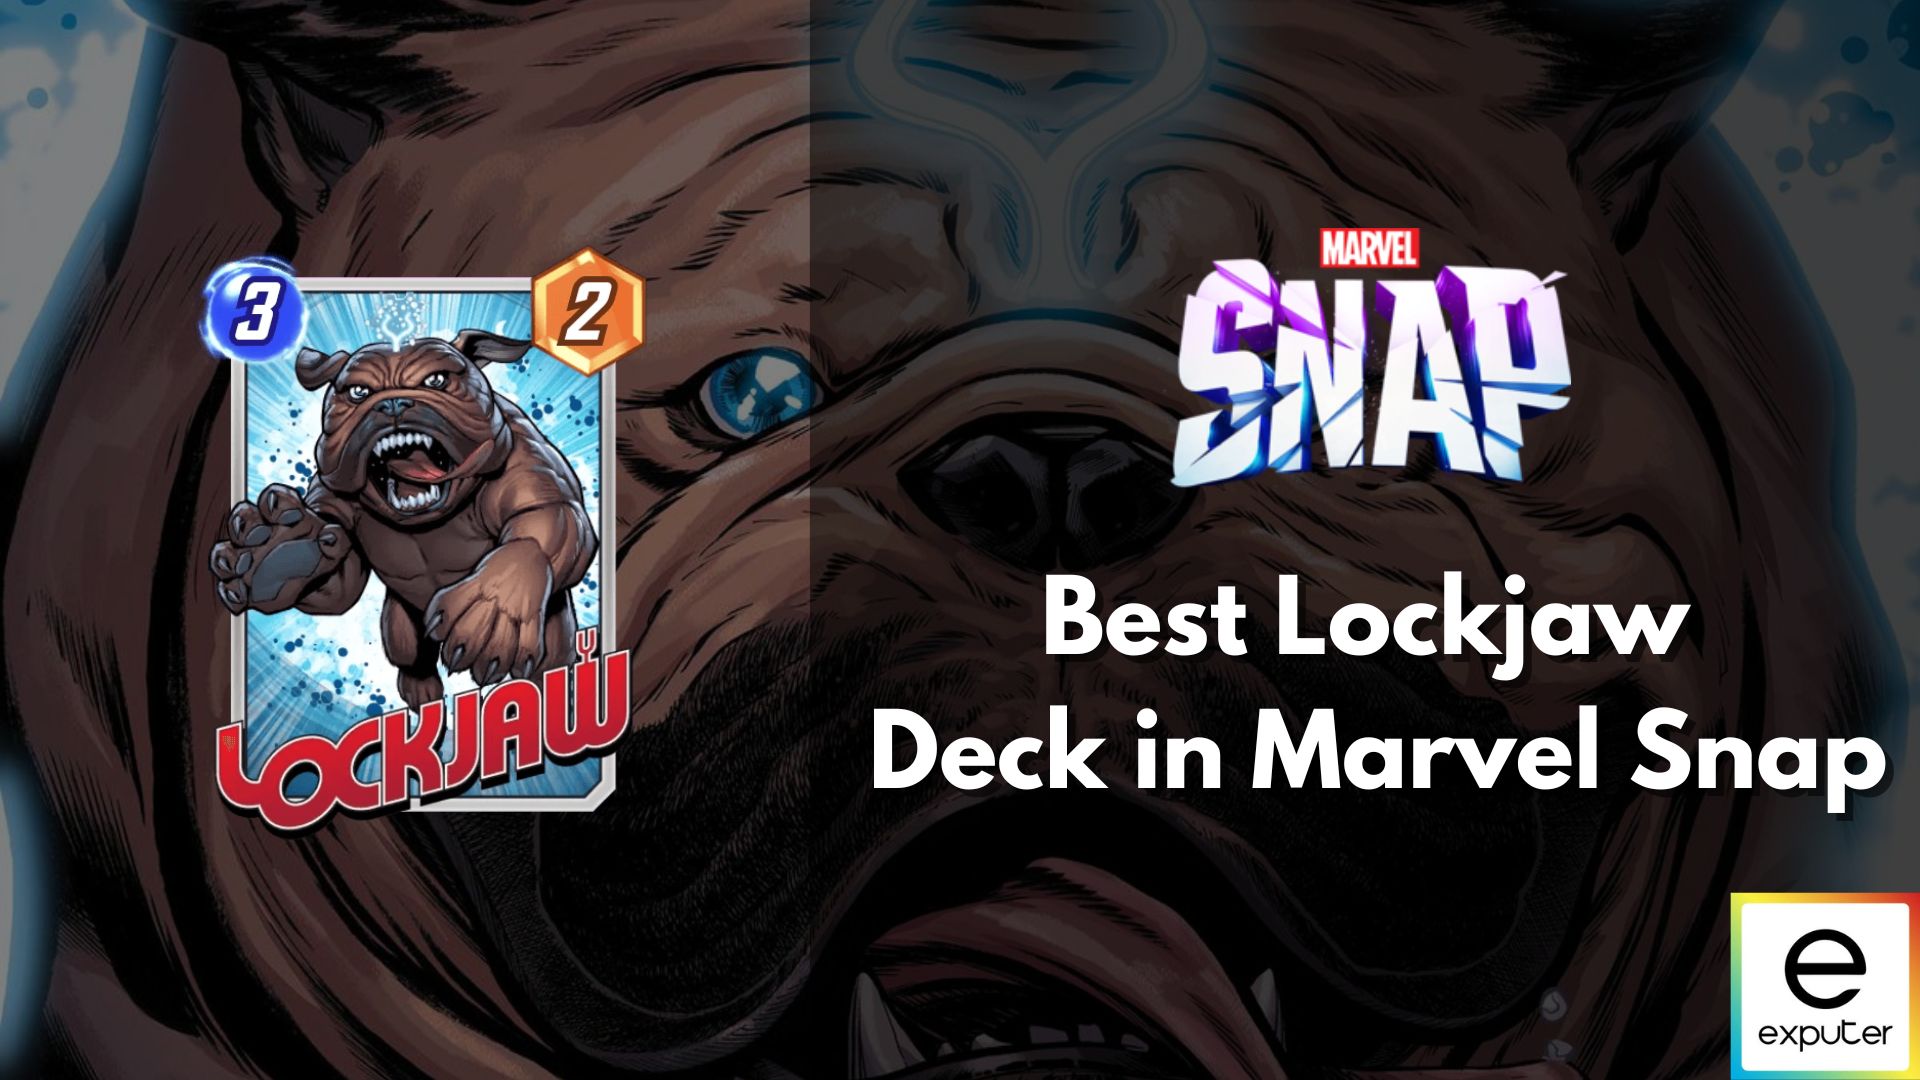 Best Lockjaw Deck in Marvel Snap